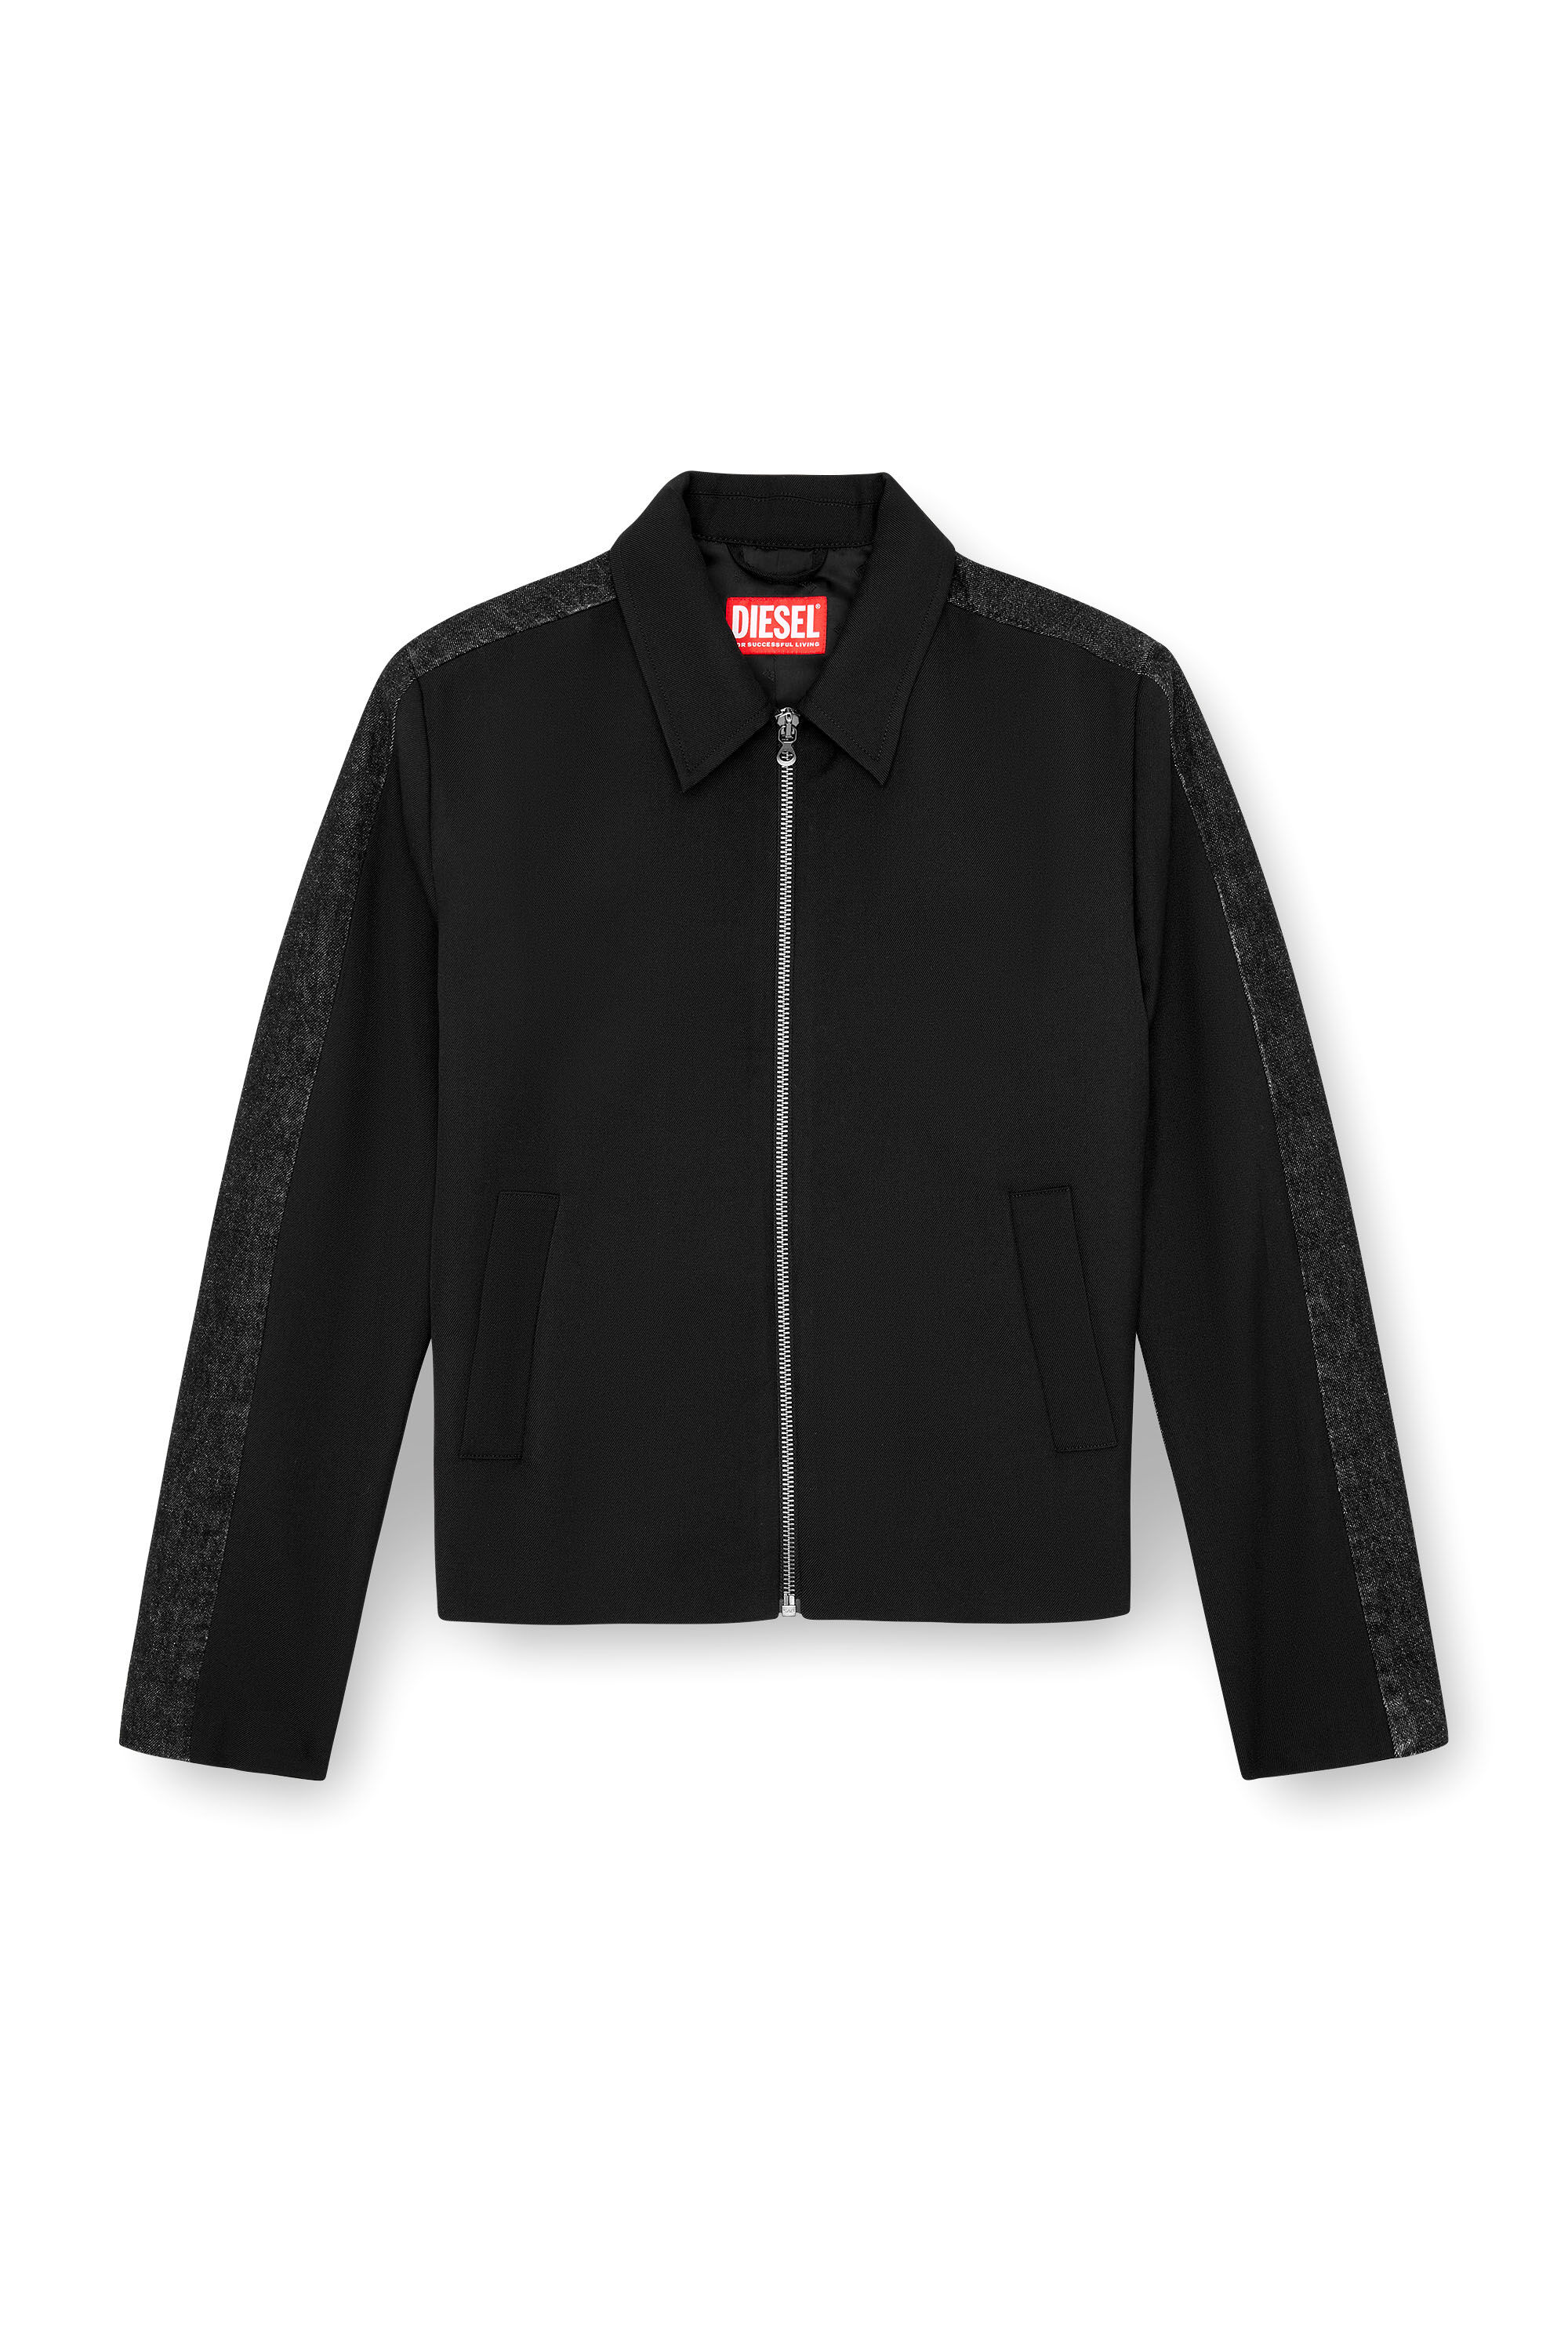 Diesel - J-RHEIN, Male Blouson jacket in wool blend and denim in ブラック - Image 2